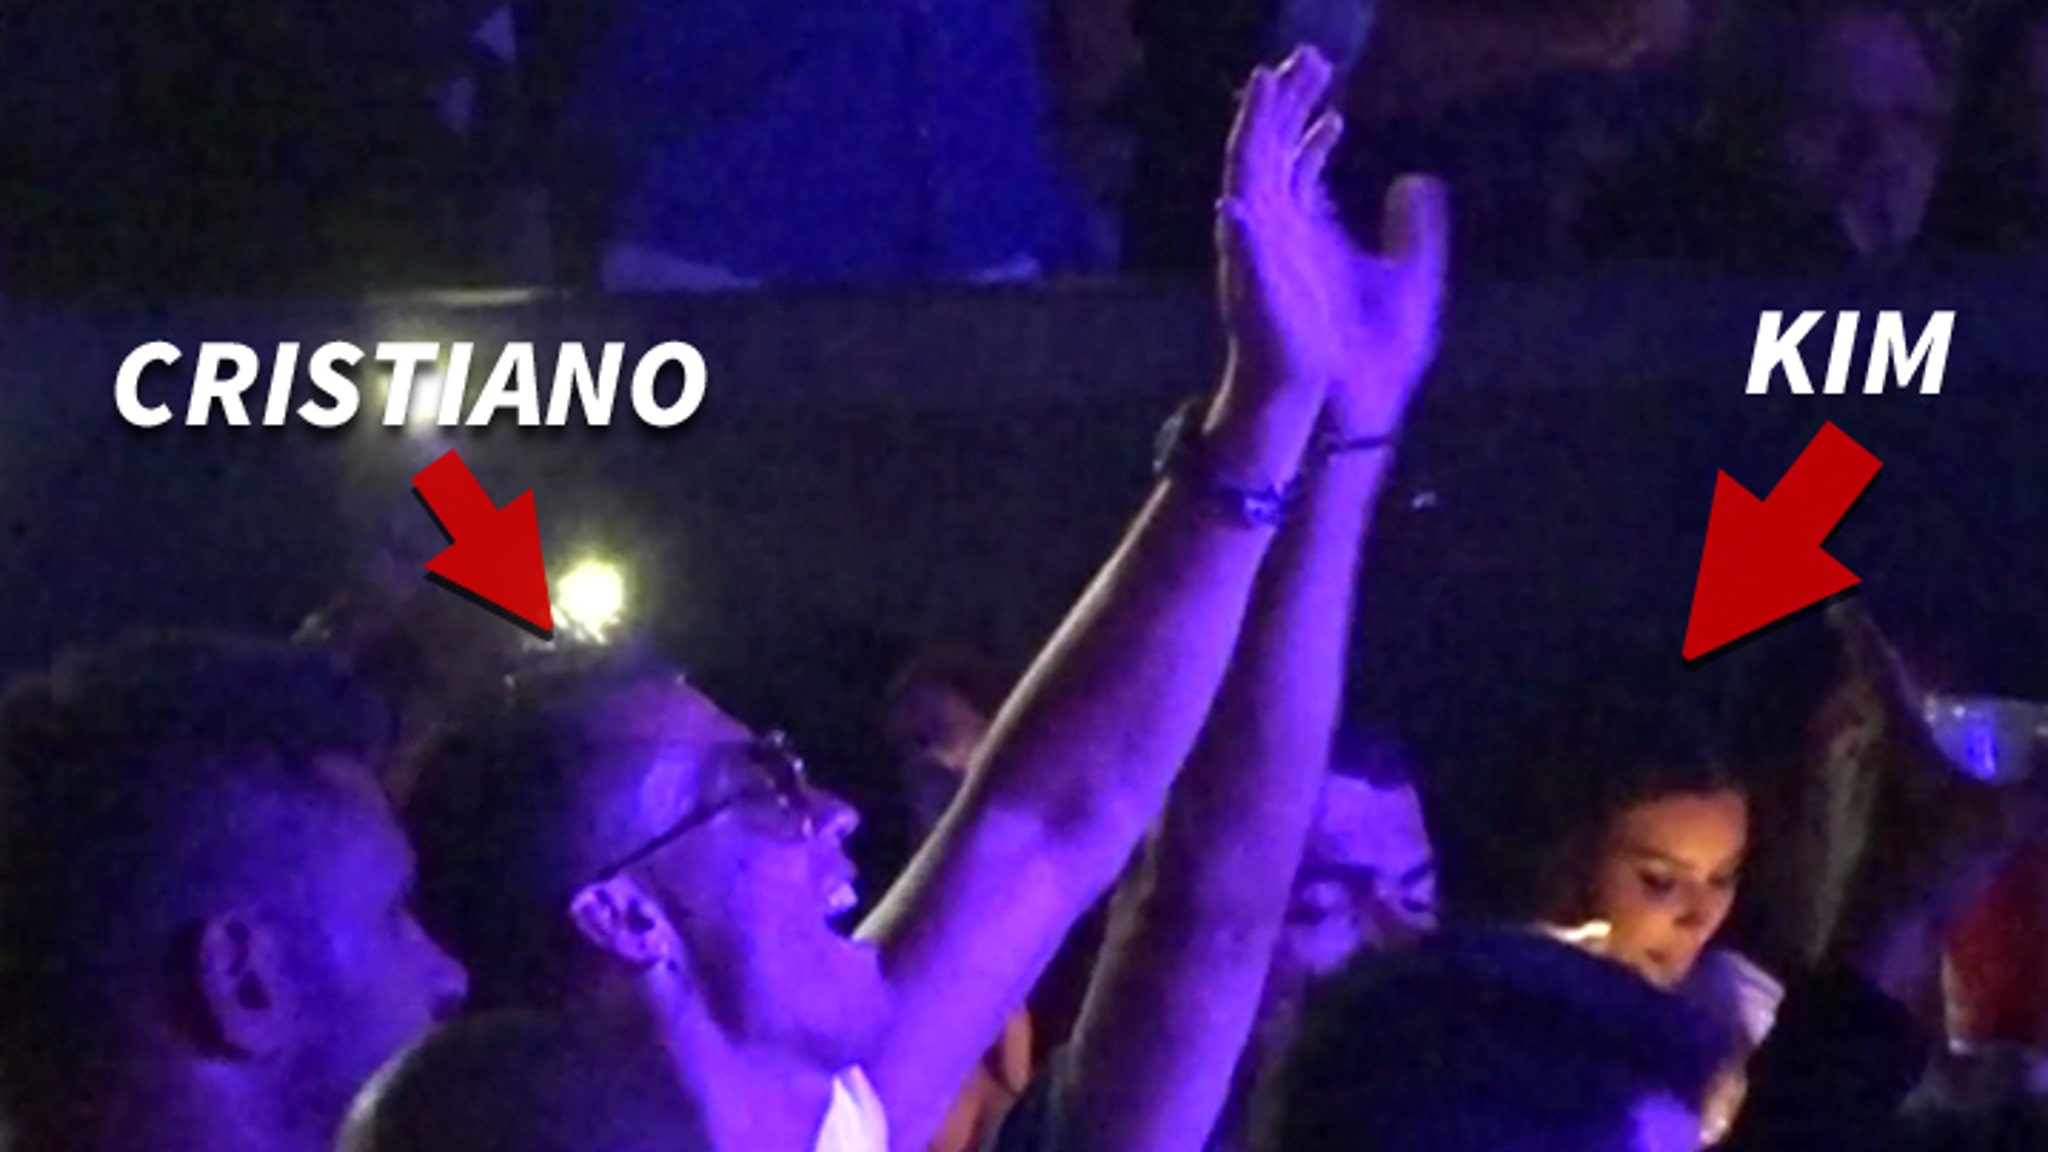 Cristiano Ronaldo Dancing Next to Kiм Kardashian At J Lo Concert